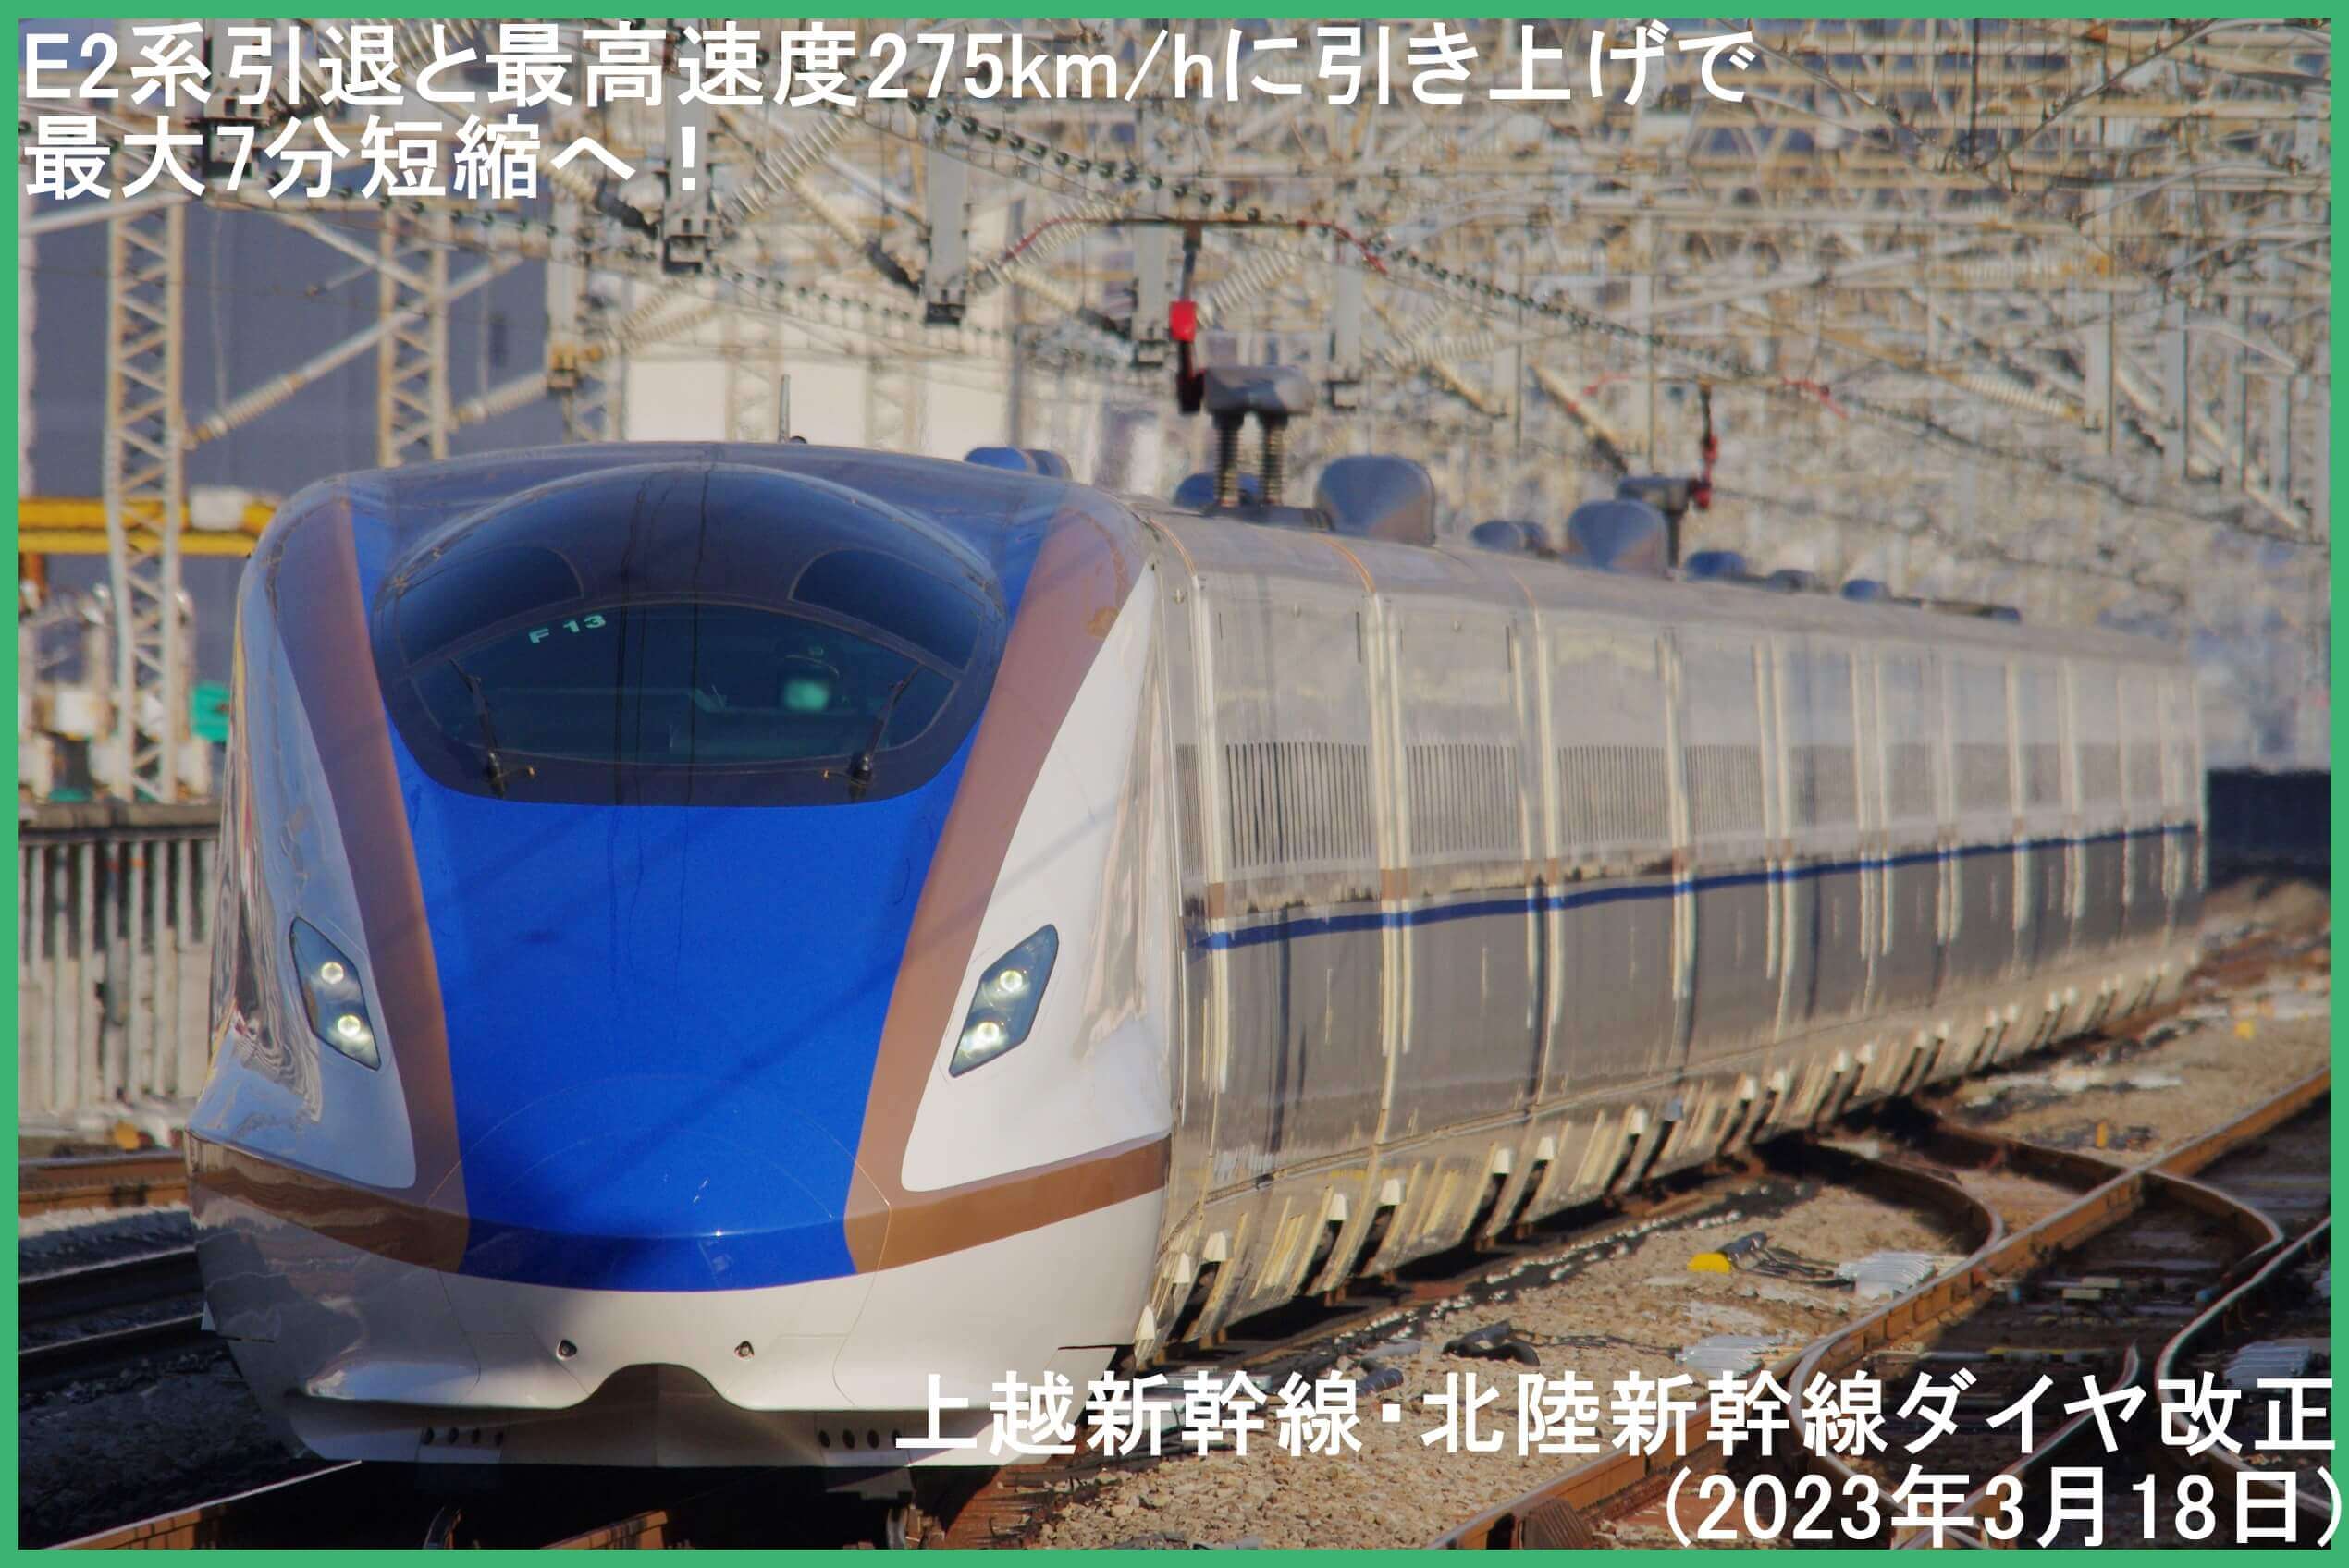 E2系引退と最高速度275km/hに引き上げで最大7分短縮へ！　上越新幹線・北陸新幹線ダイヤ改正(2023年3月18日)